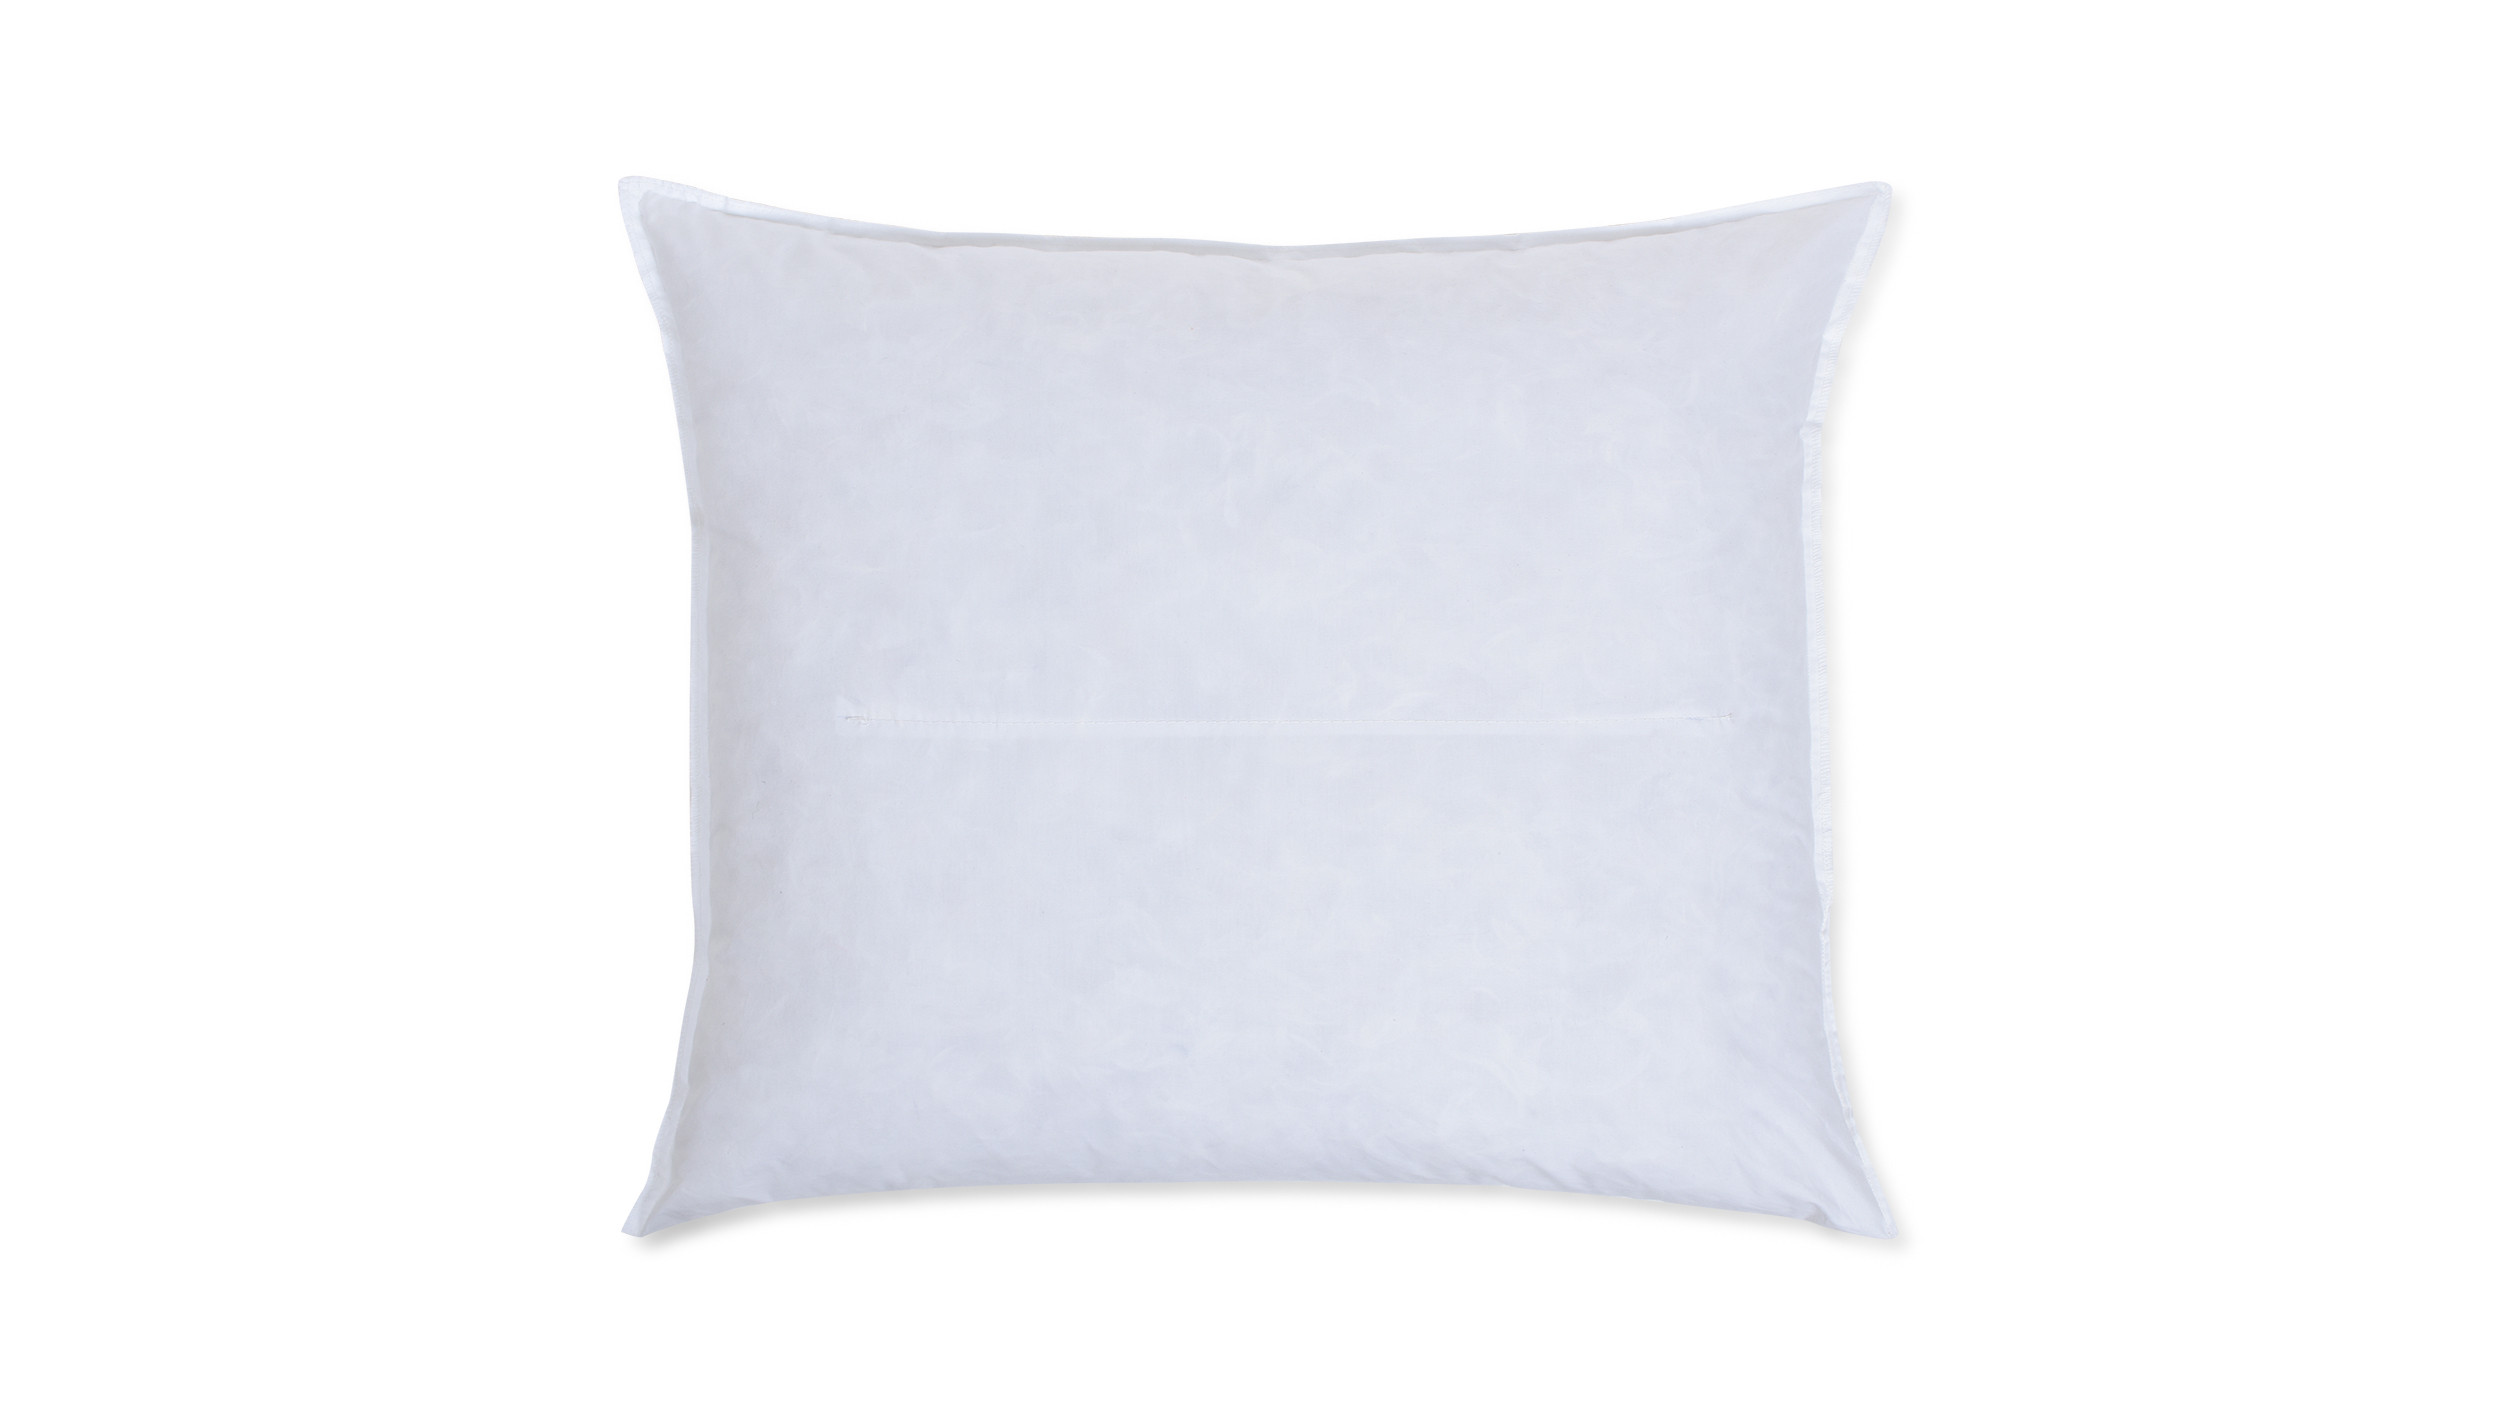 Signal Square Pillow Blu Dot Charcoal 24 H x 24 W x 6.5 D